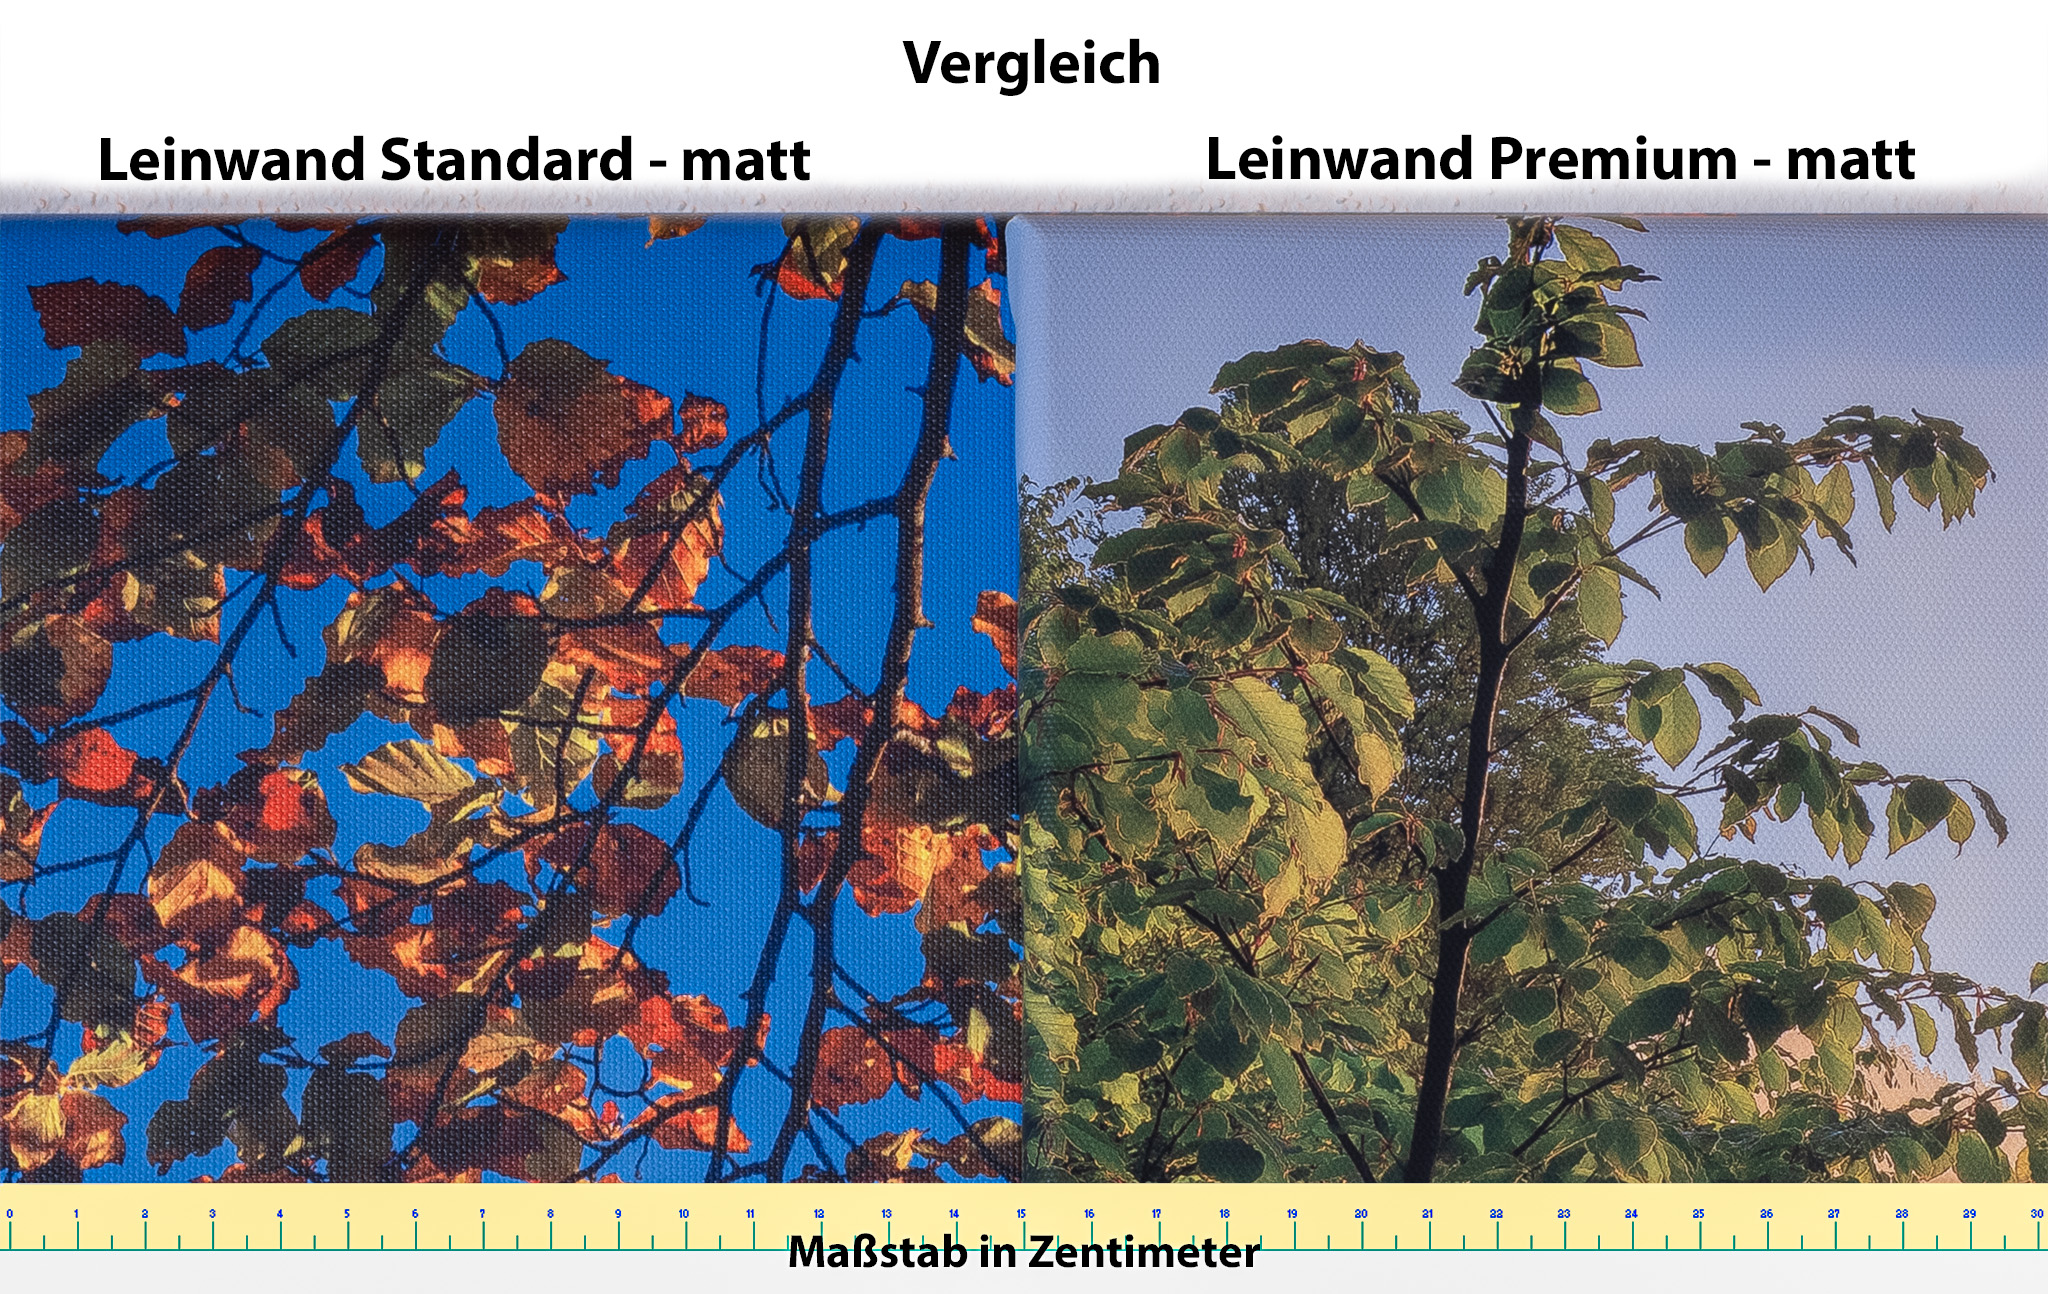 Vergleich Leinwand Standard vs Leinwand Premium